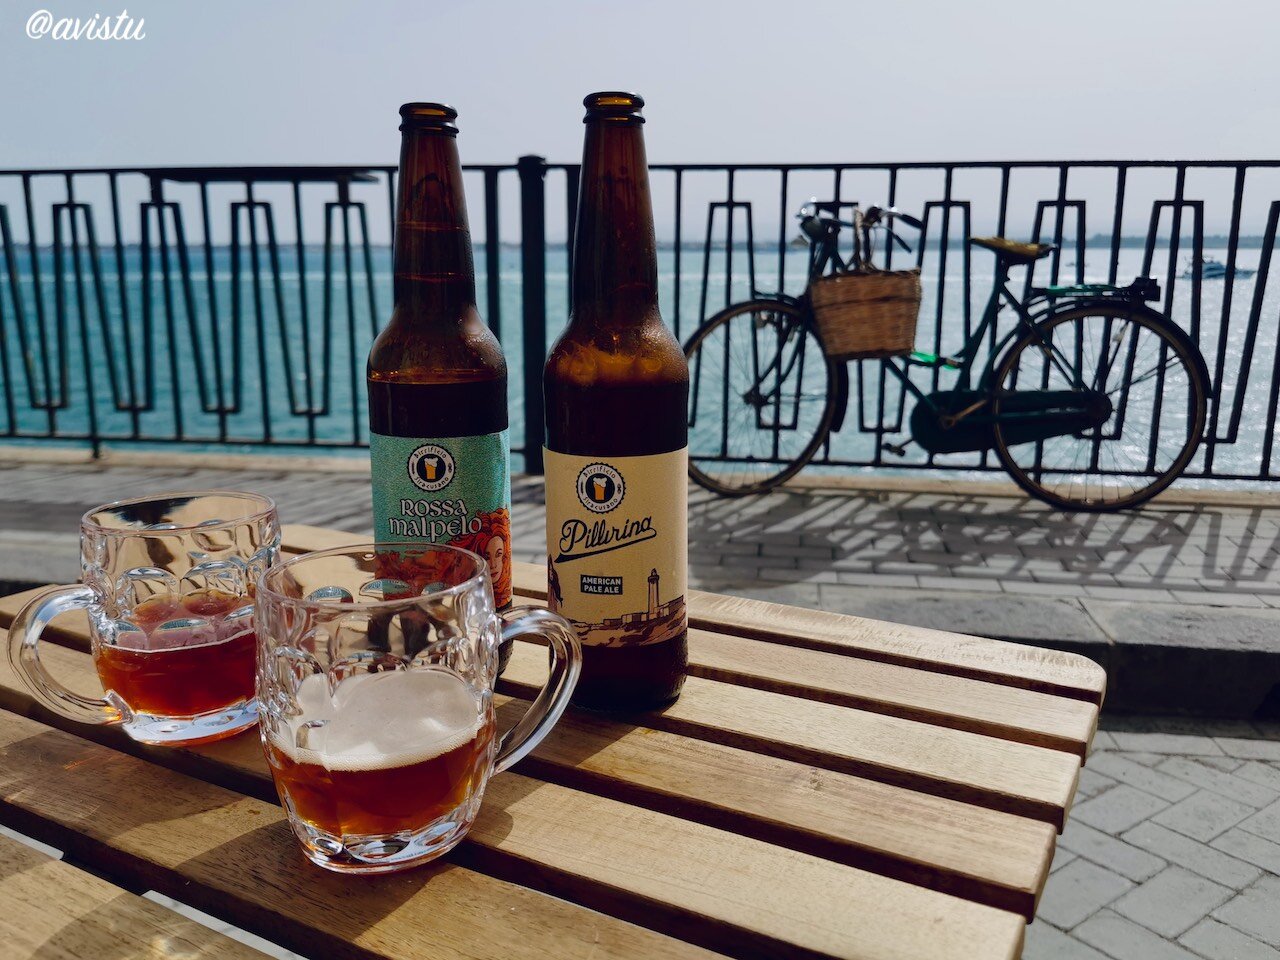 Tomando una cerveza en la Isla de Ortigia, Siracusa Sicilia, [(c) Foto: @avistu]